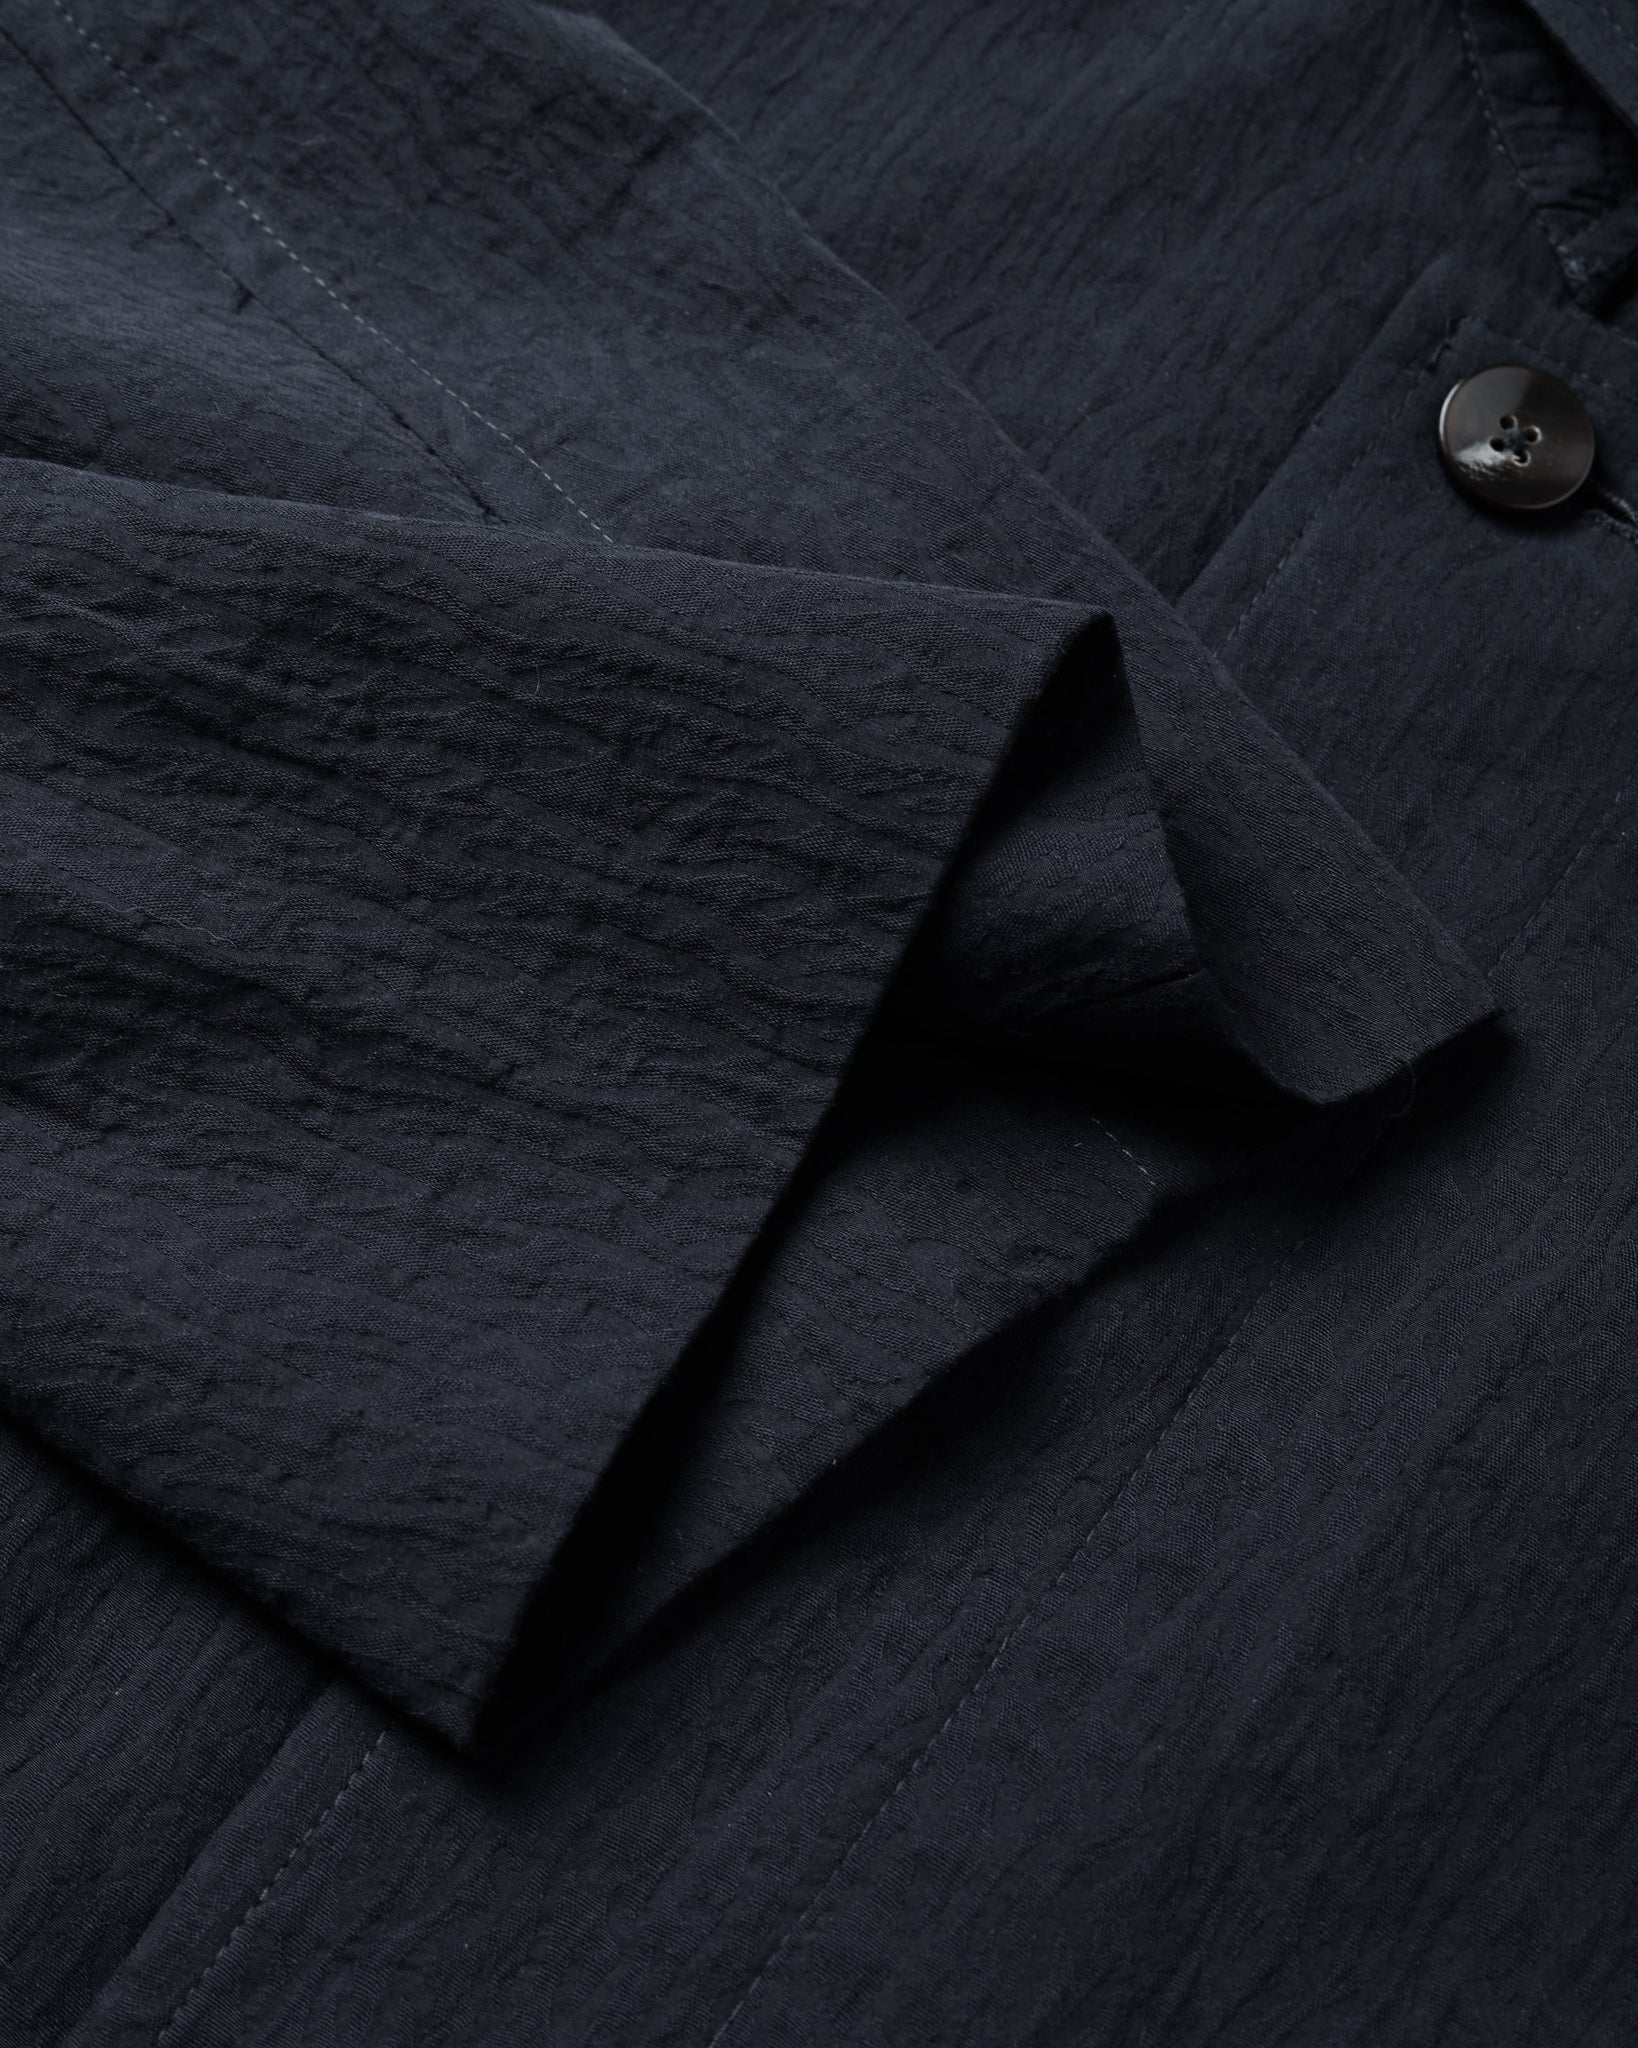 ROSEN Orwellian Coat in Cotton-Linen